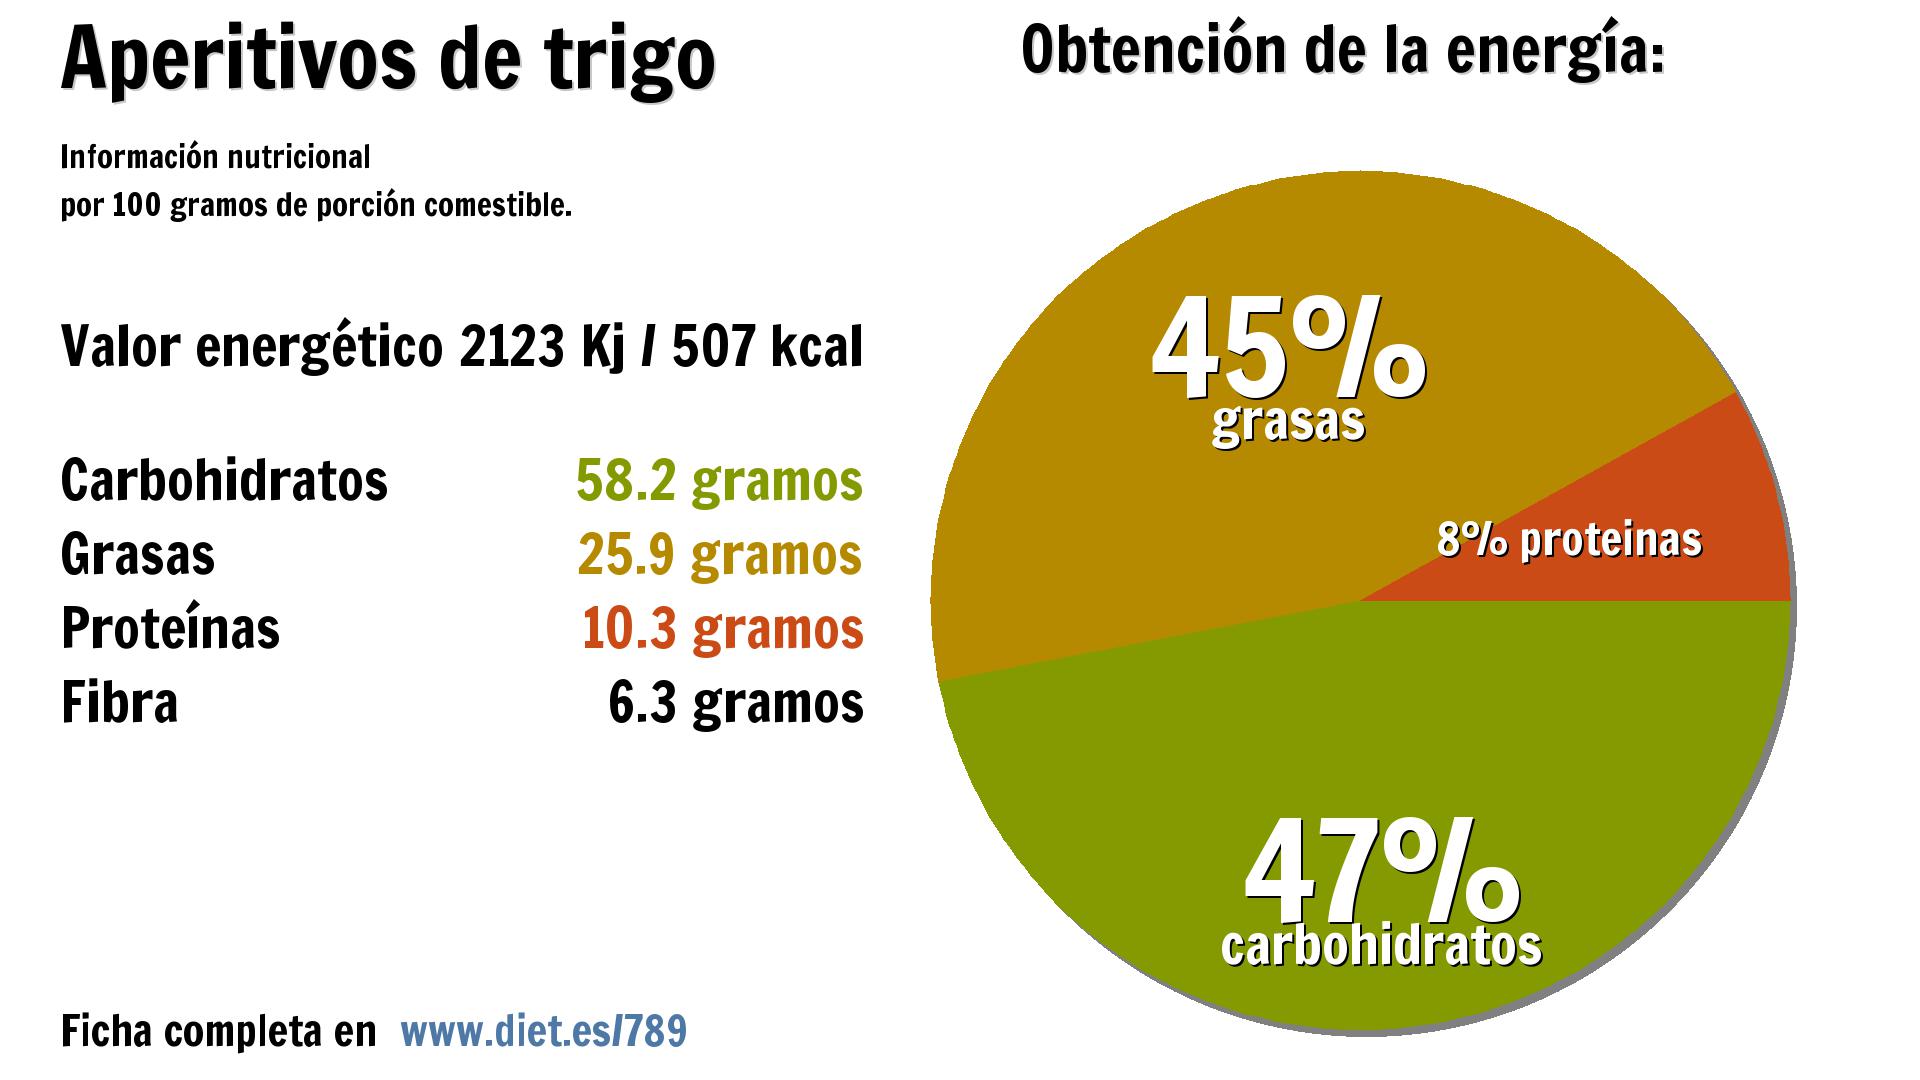 Aperitivos de trigo: energía 2123 Kj, carbohidratos 58 g., grasas 26 g., proteínas 10 g. y fibra 6 g.